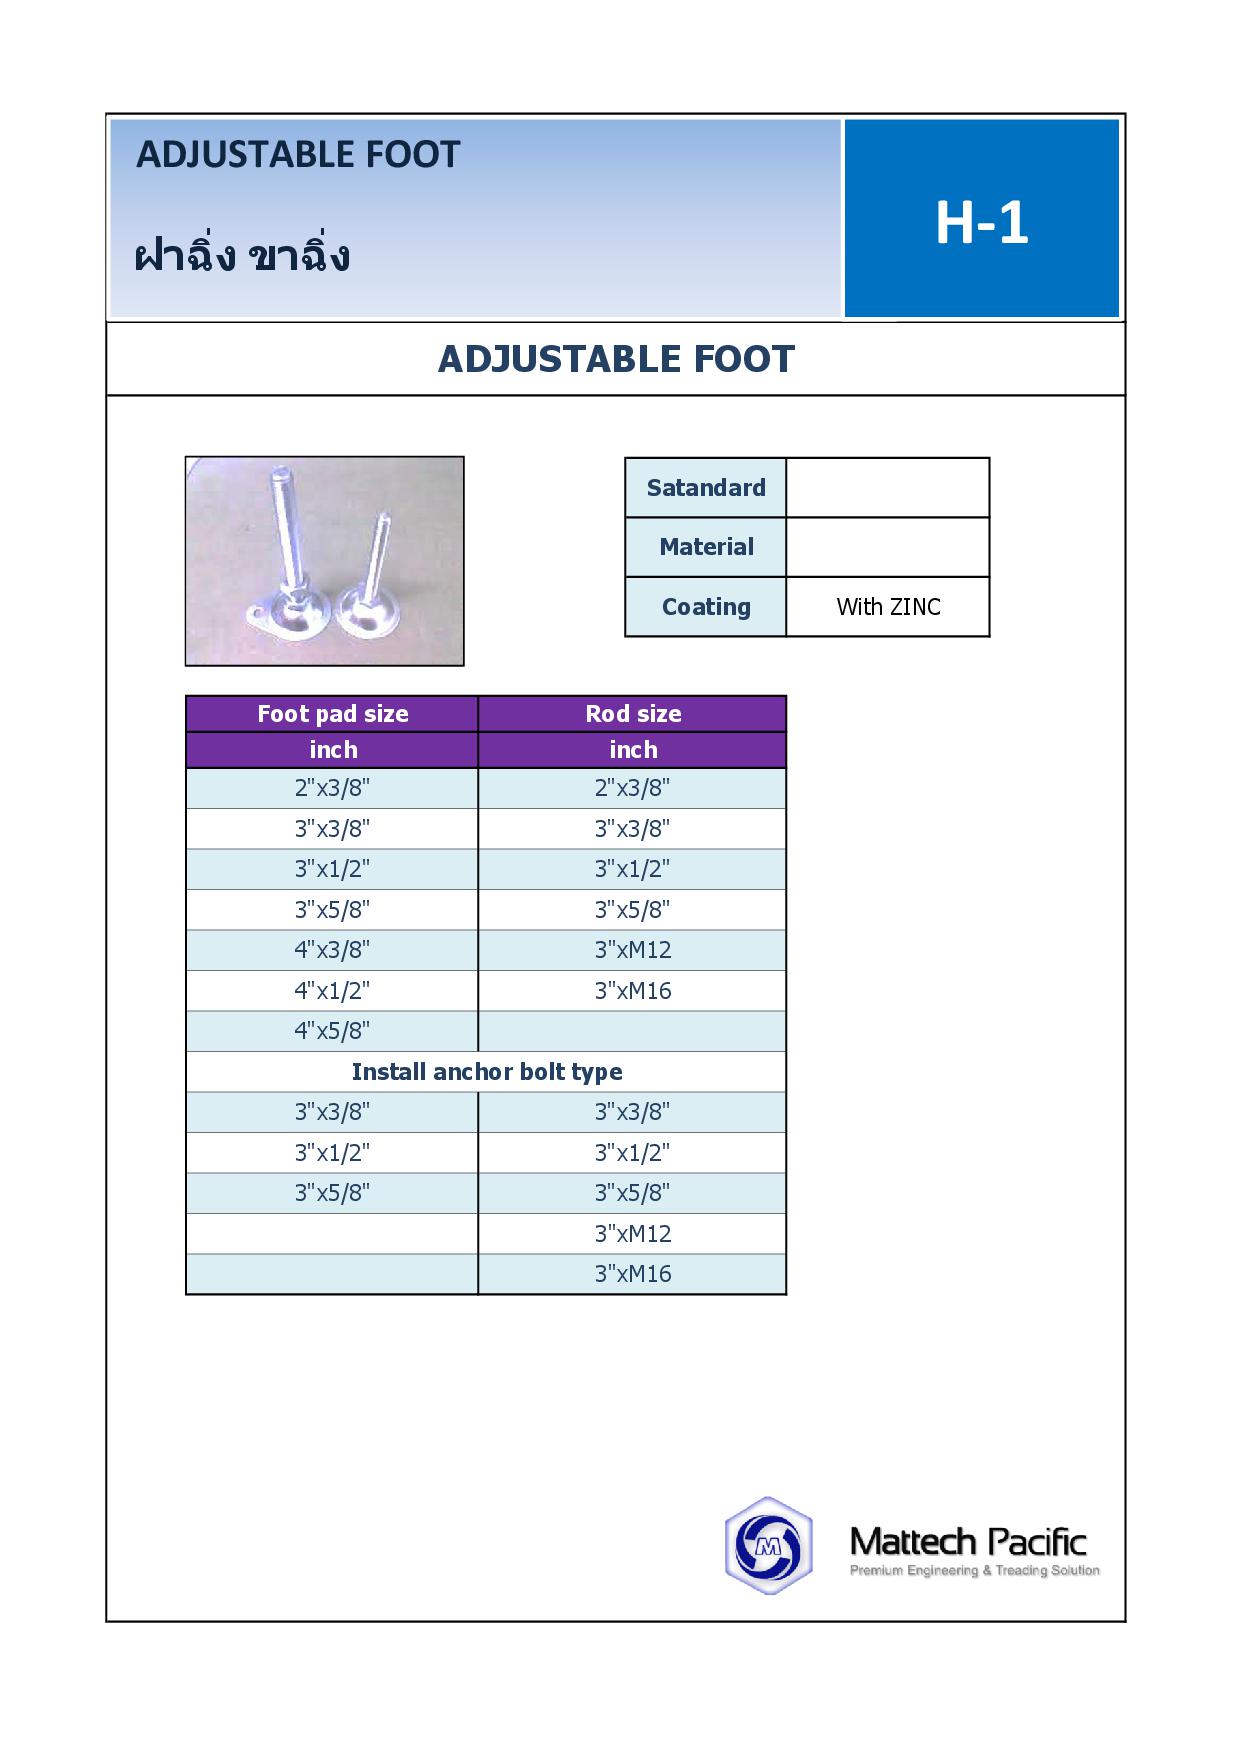 Adjustable foot